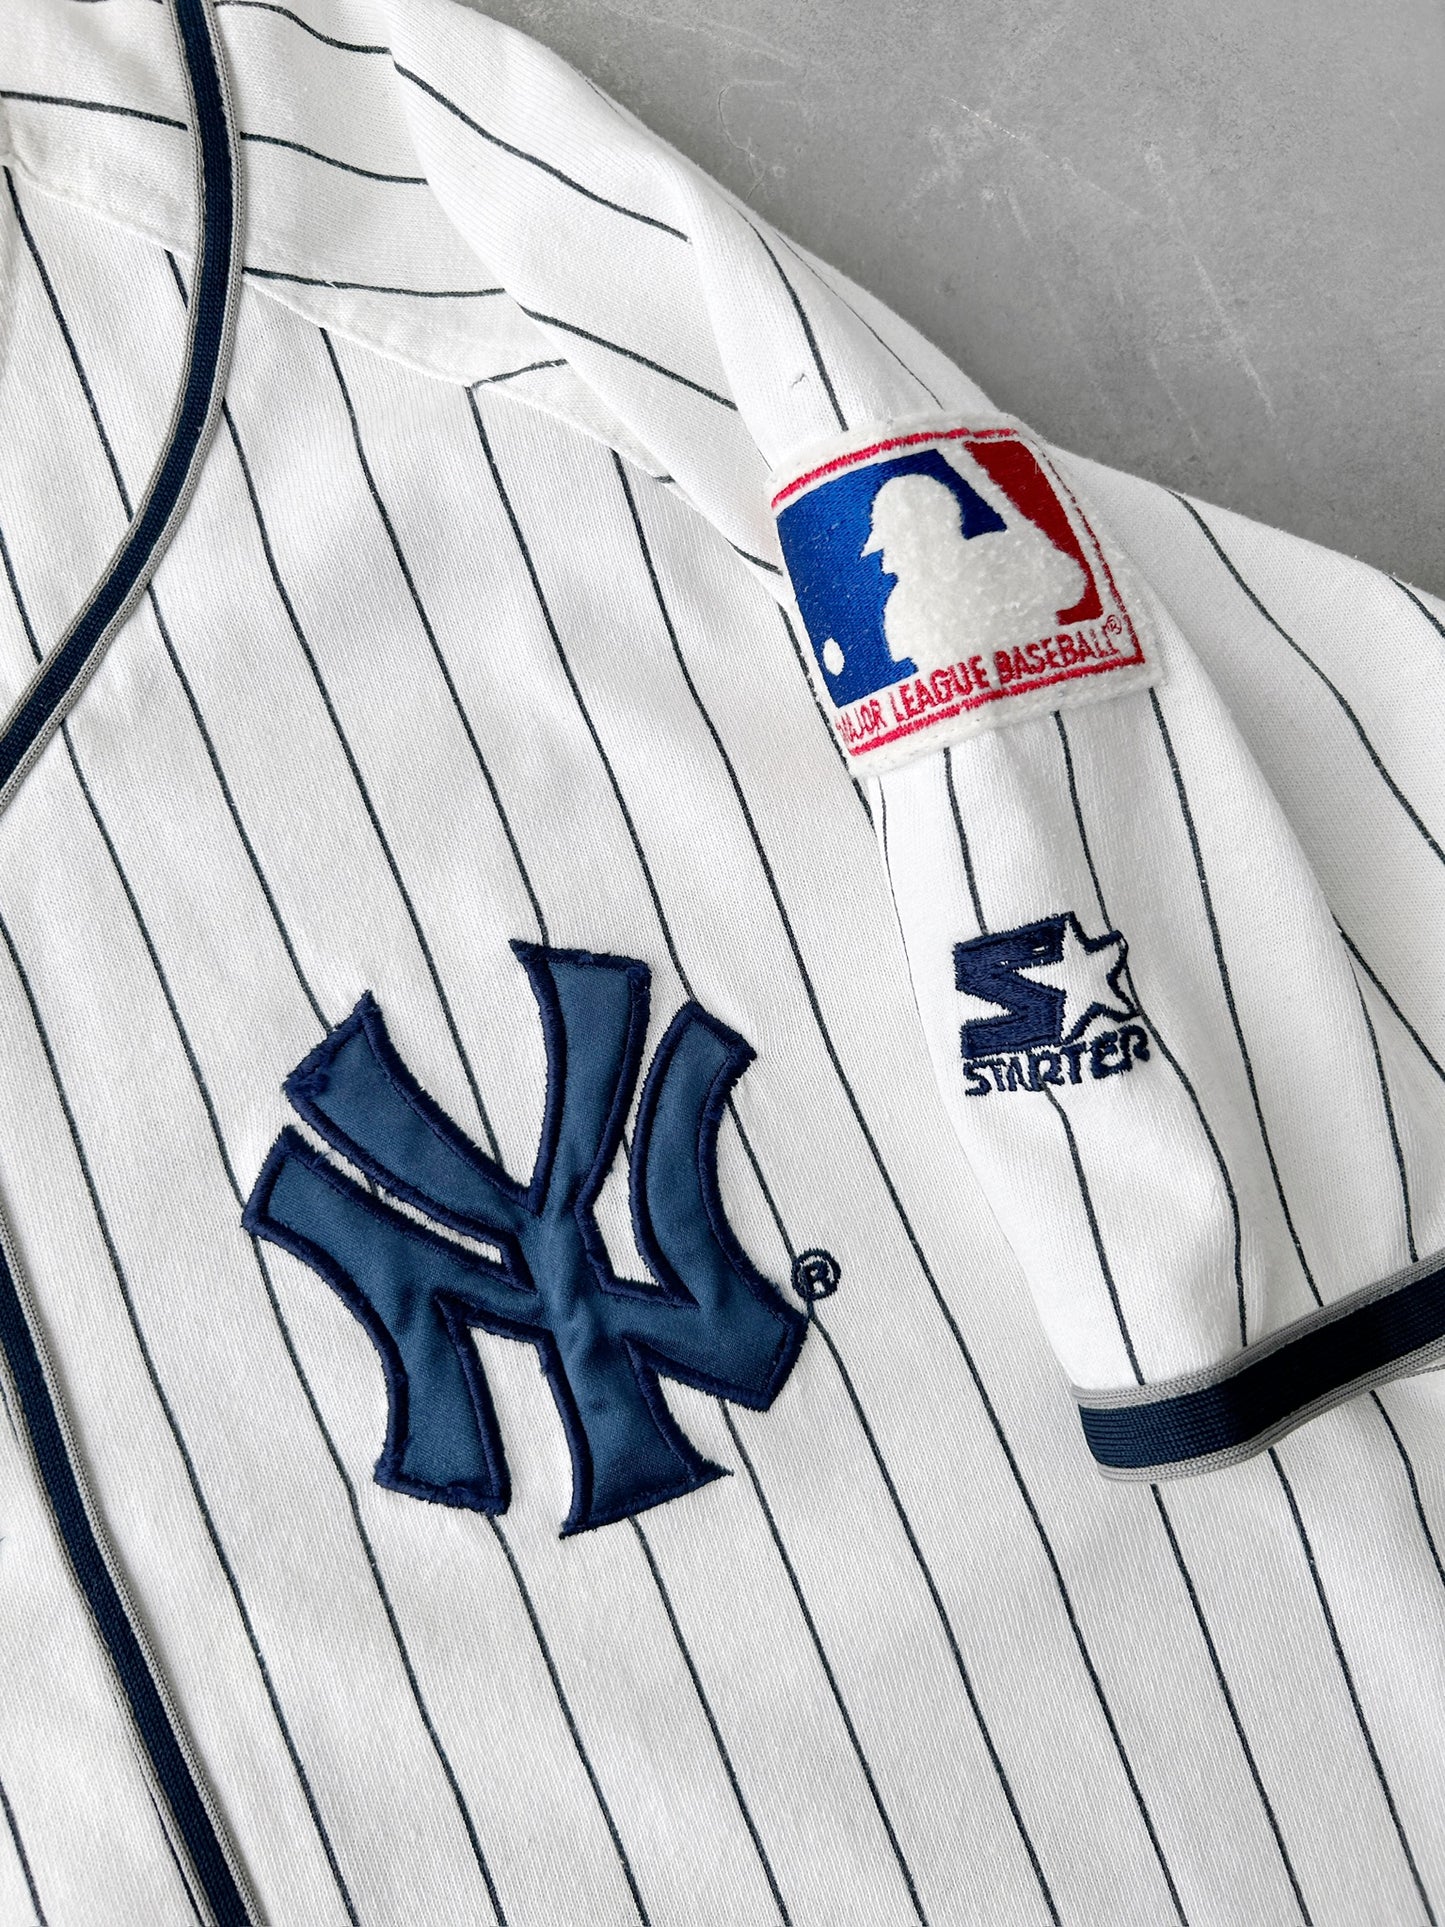 New York Yankees Jersey 90's - XL